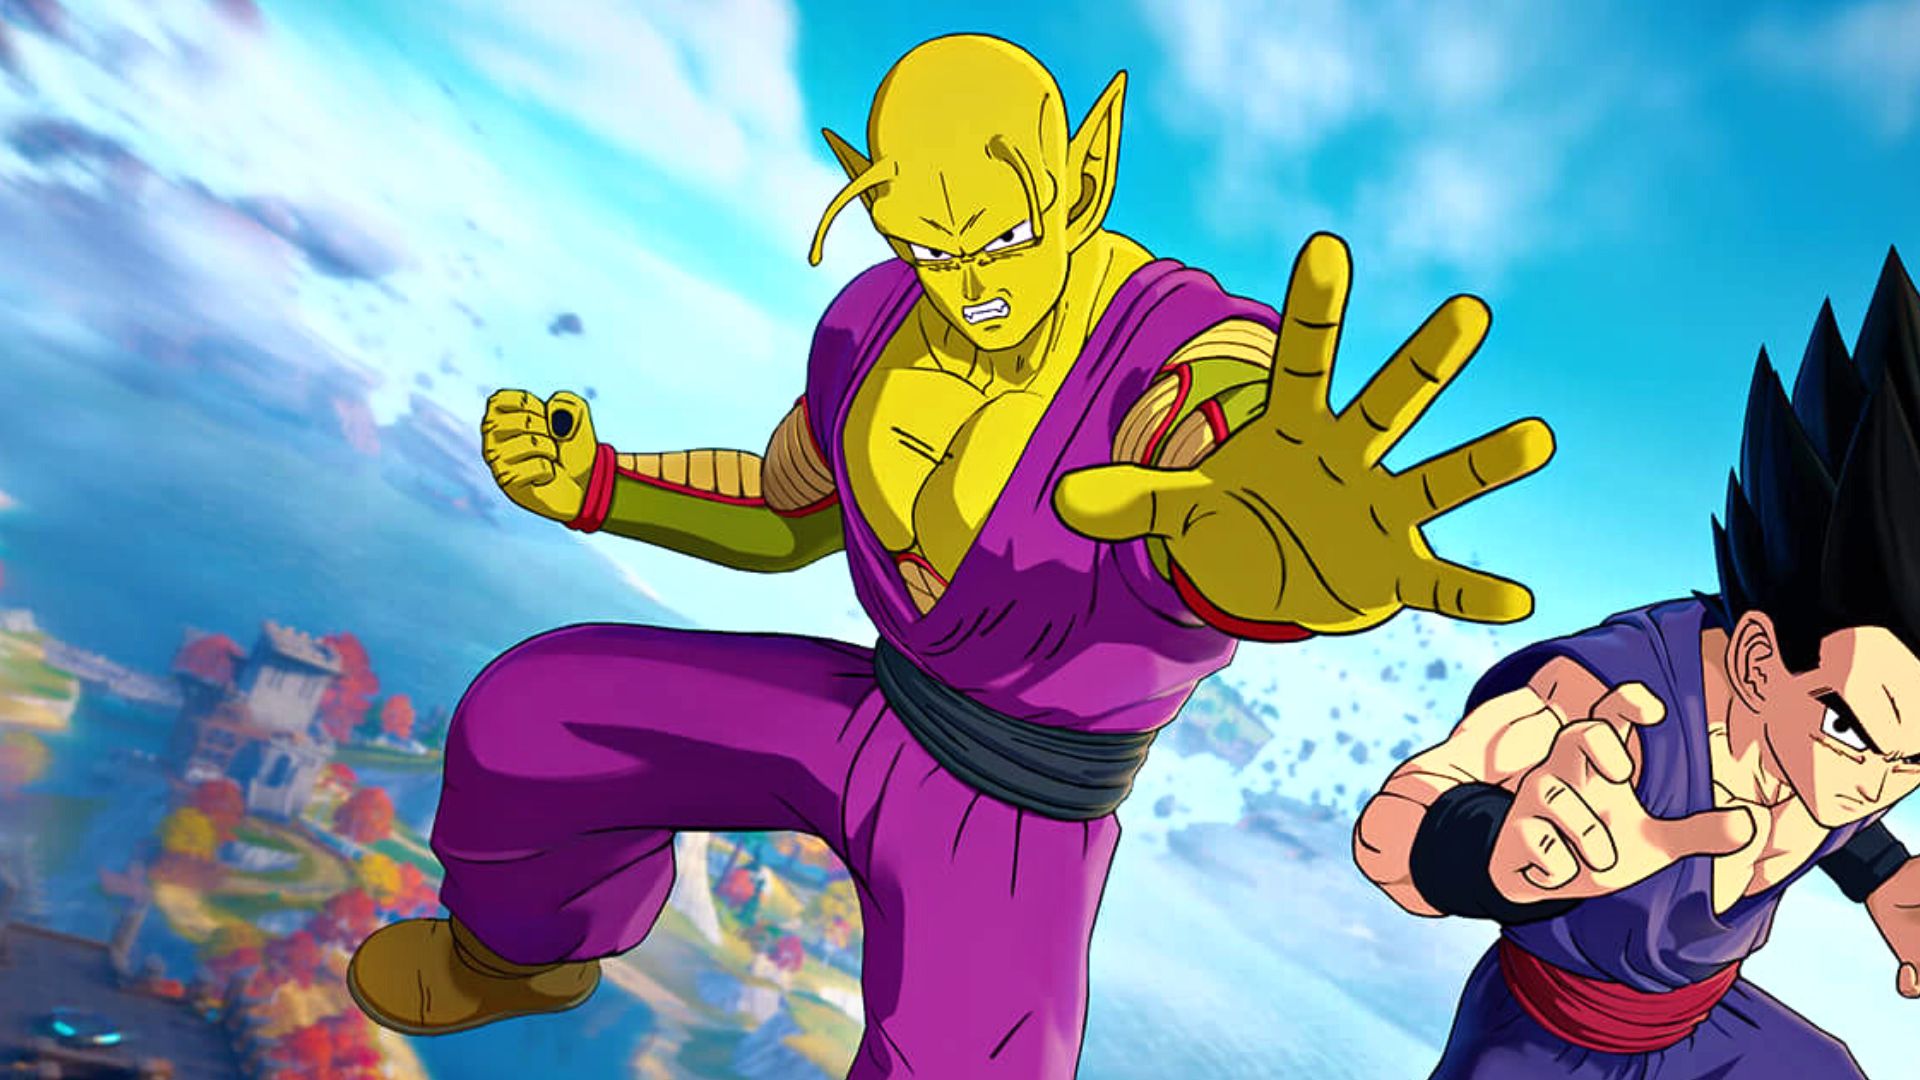 Son Gohan and Piccolo Power Up the Return of Fortnite x Dragon Ball!